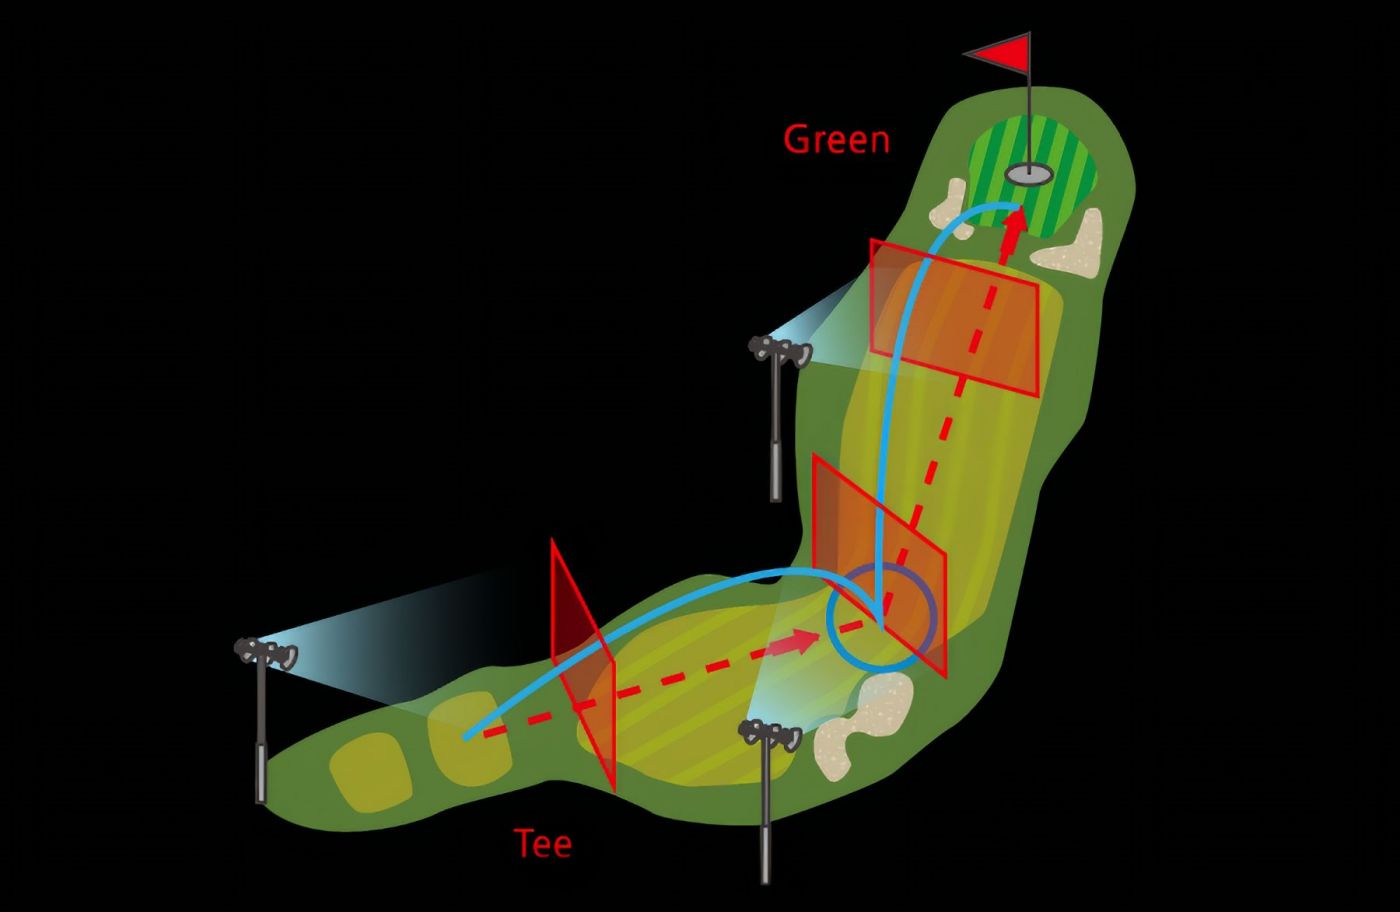 LED Golf Couse Lighting Guide 8